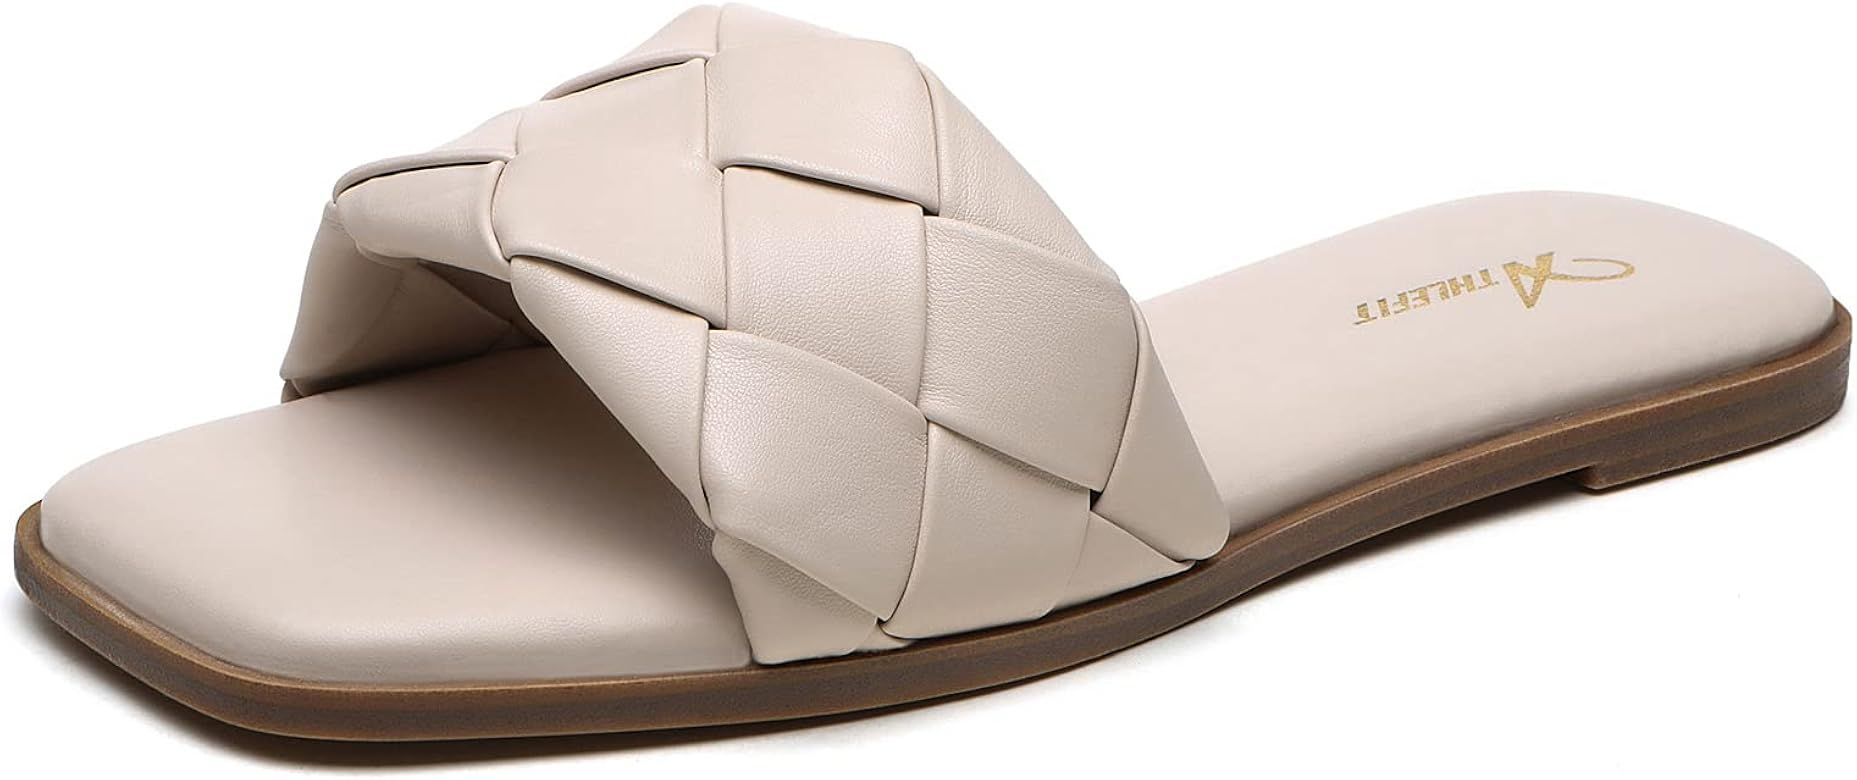 Athlefit Women's Braided Flat Sandals Square Open Toe Woven Slip On Slide Sandals | Amazon (US)